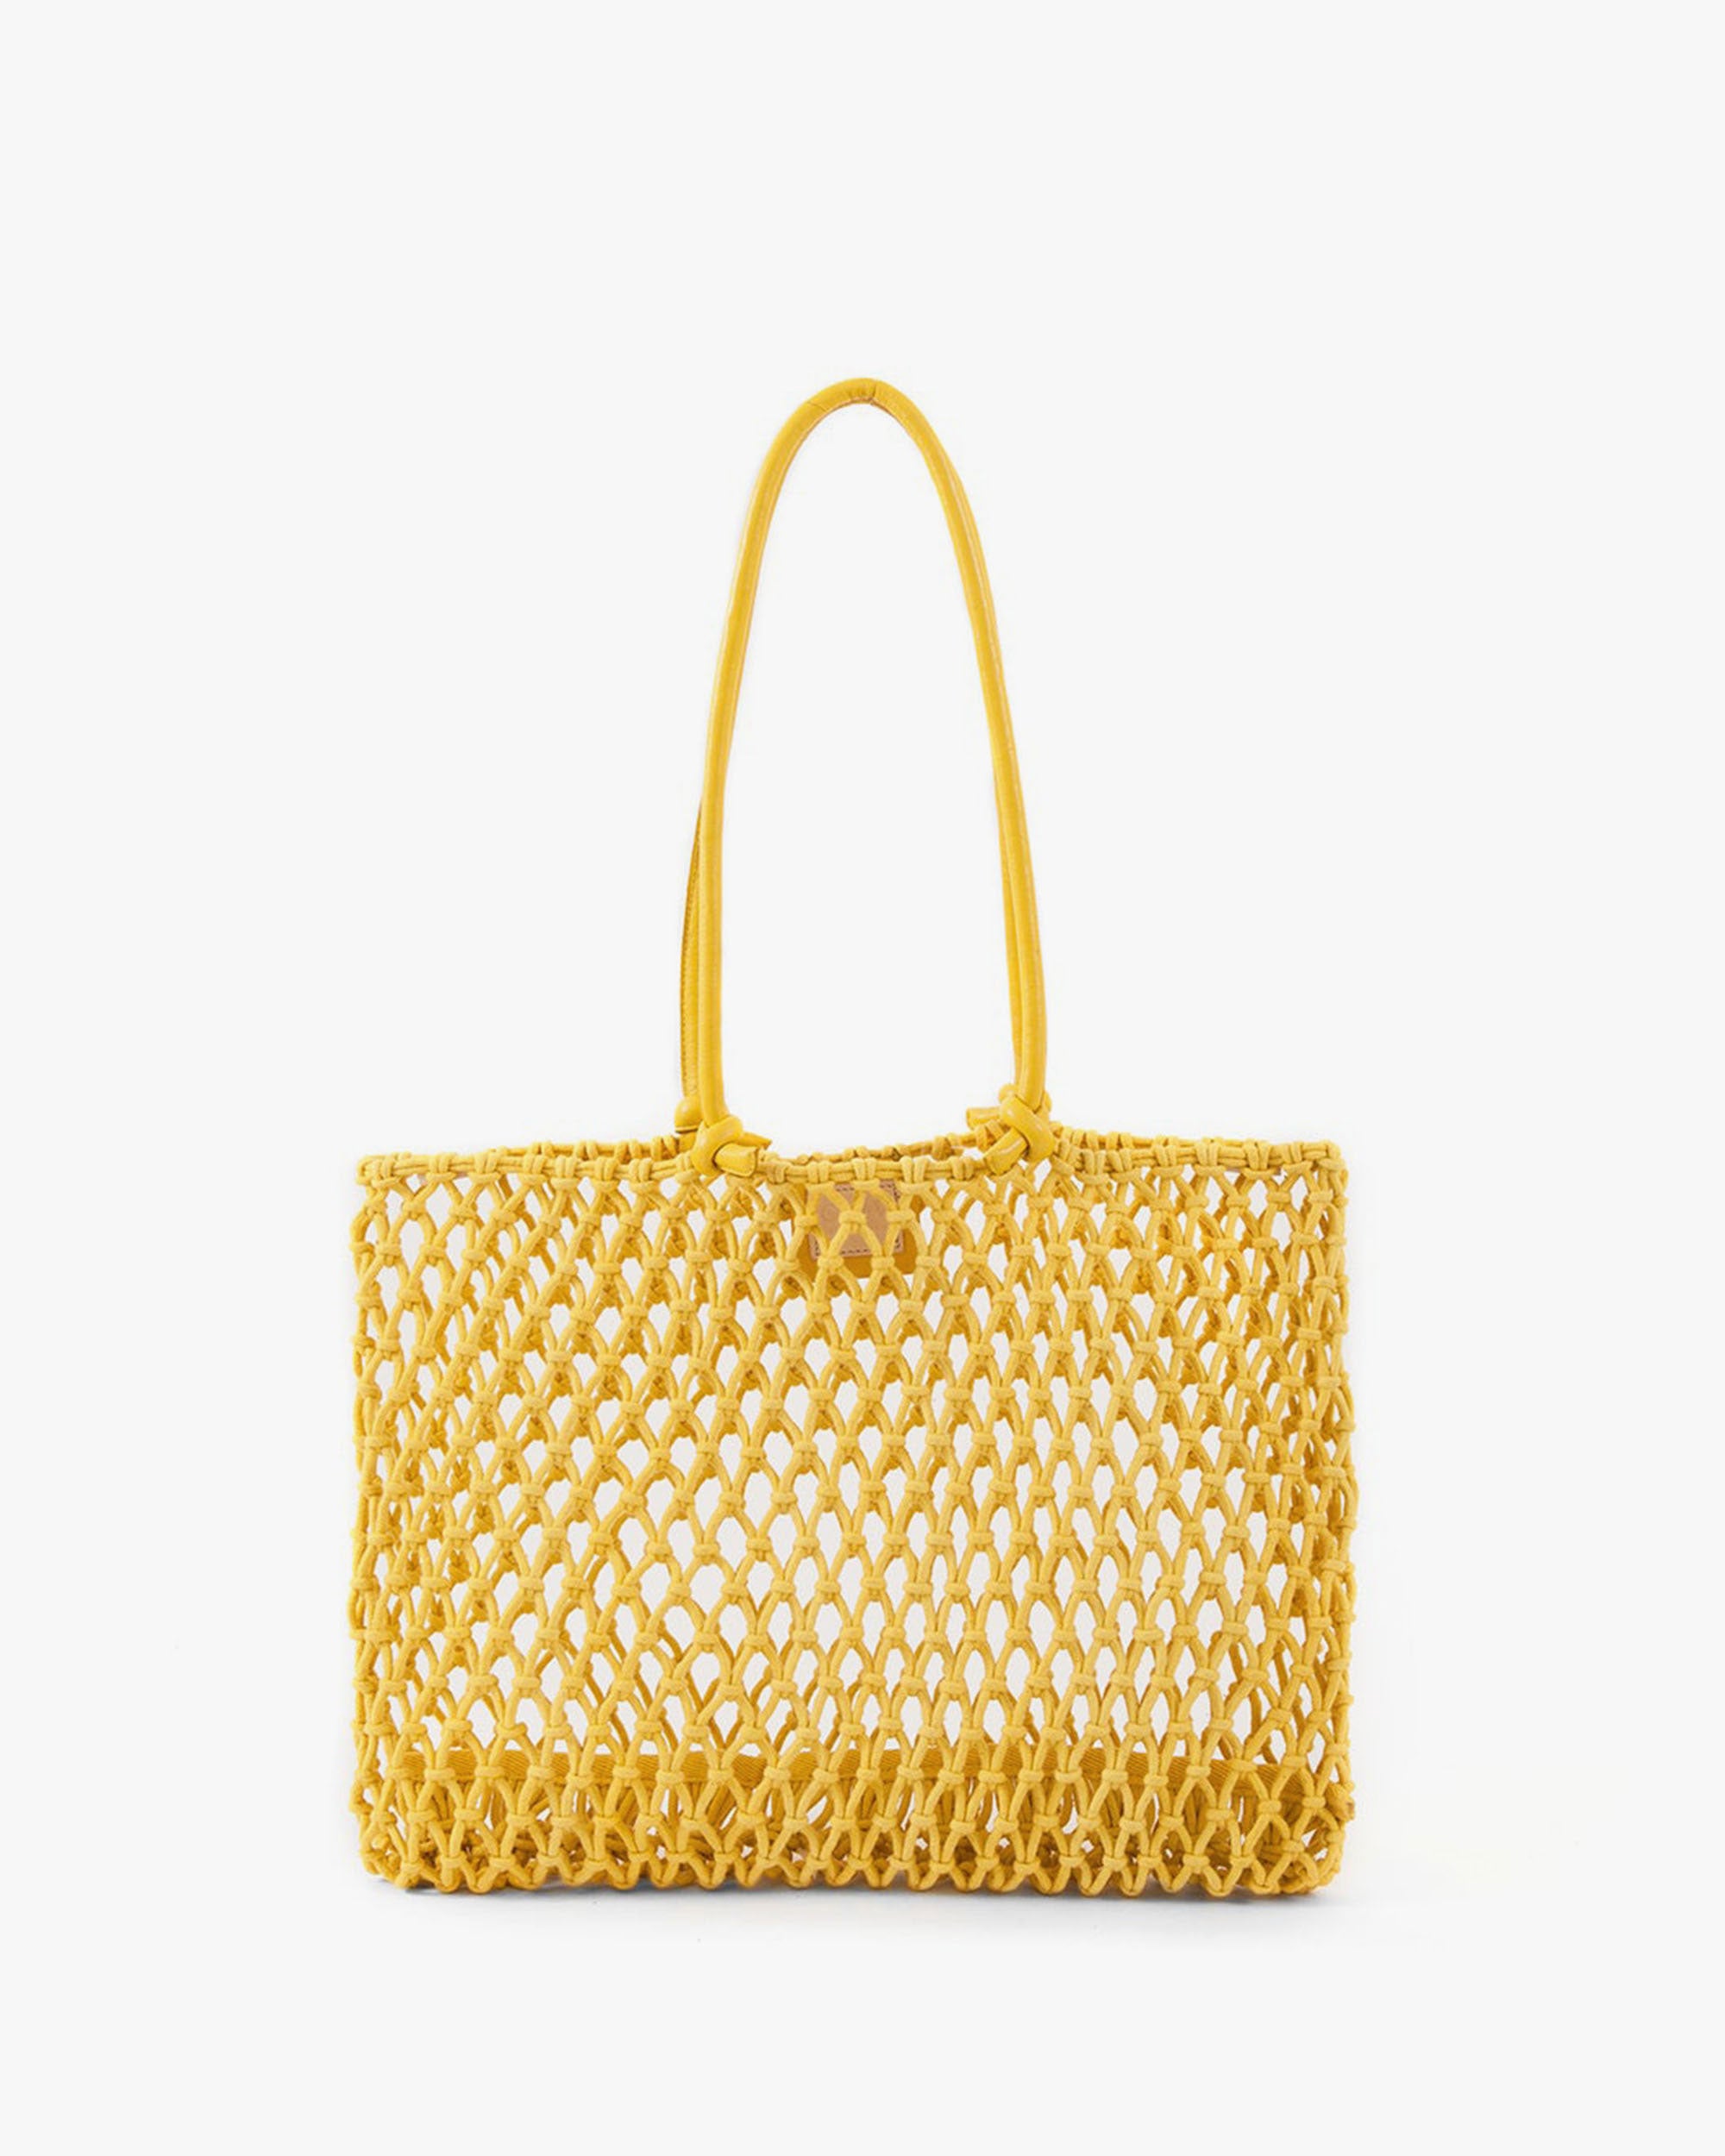 Goyard Tote Bag - Welcome to AliExpress to buy high quality goyard tote bag!